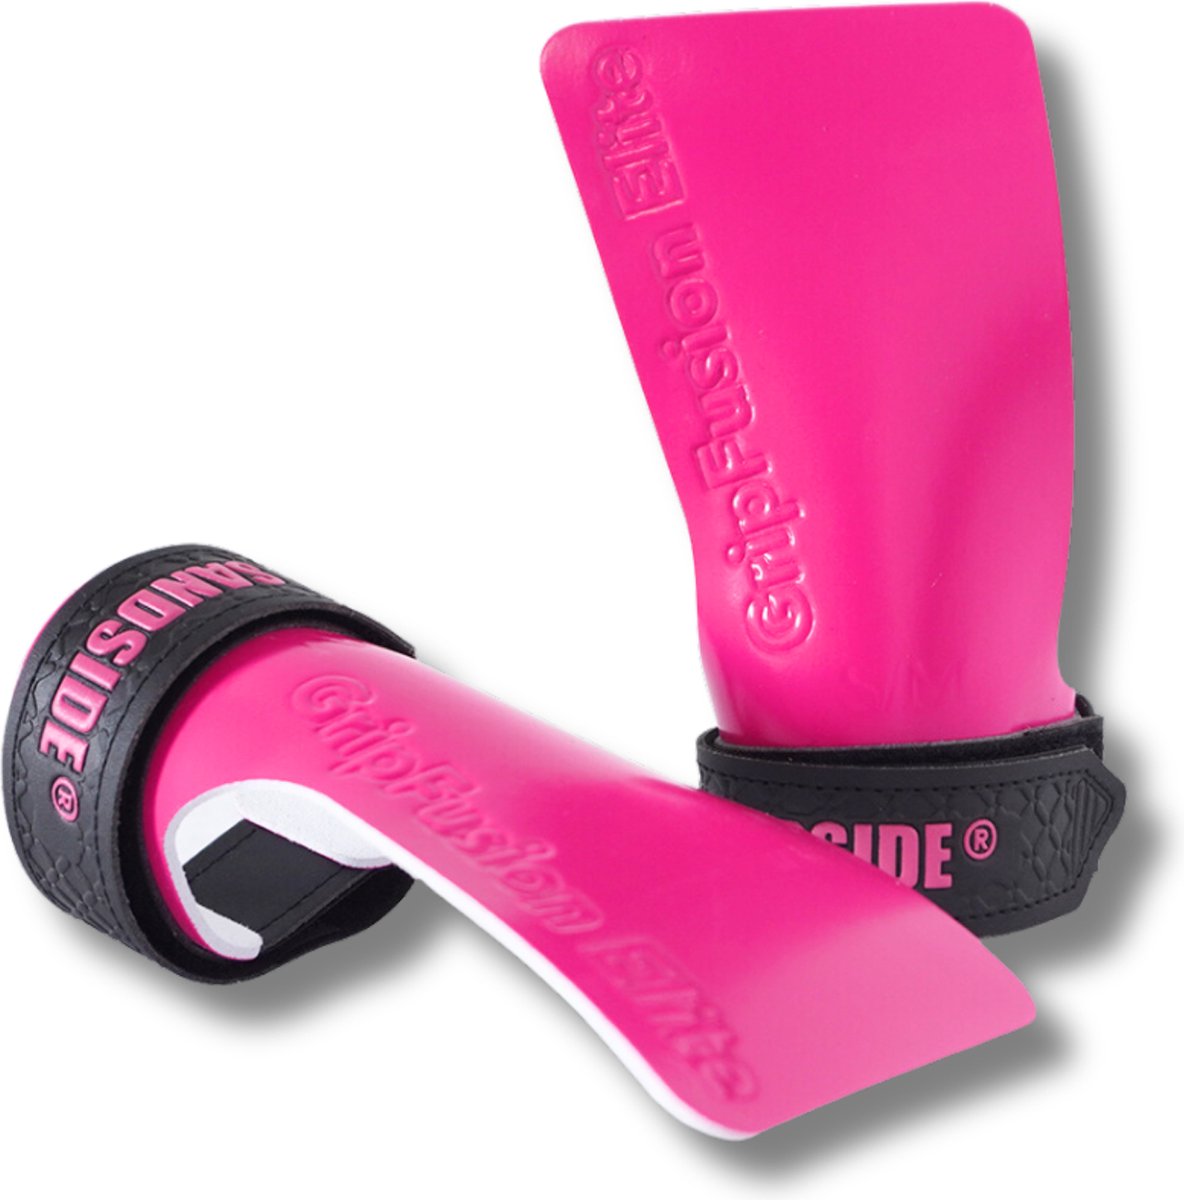 Sandside CrossFit Grips Elite 2.0 - Sticky Hand Grips - No Chalk - Fitness Handschoenen - Fingerless Grips - Hot Pink S/M